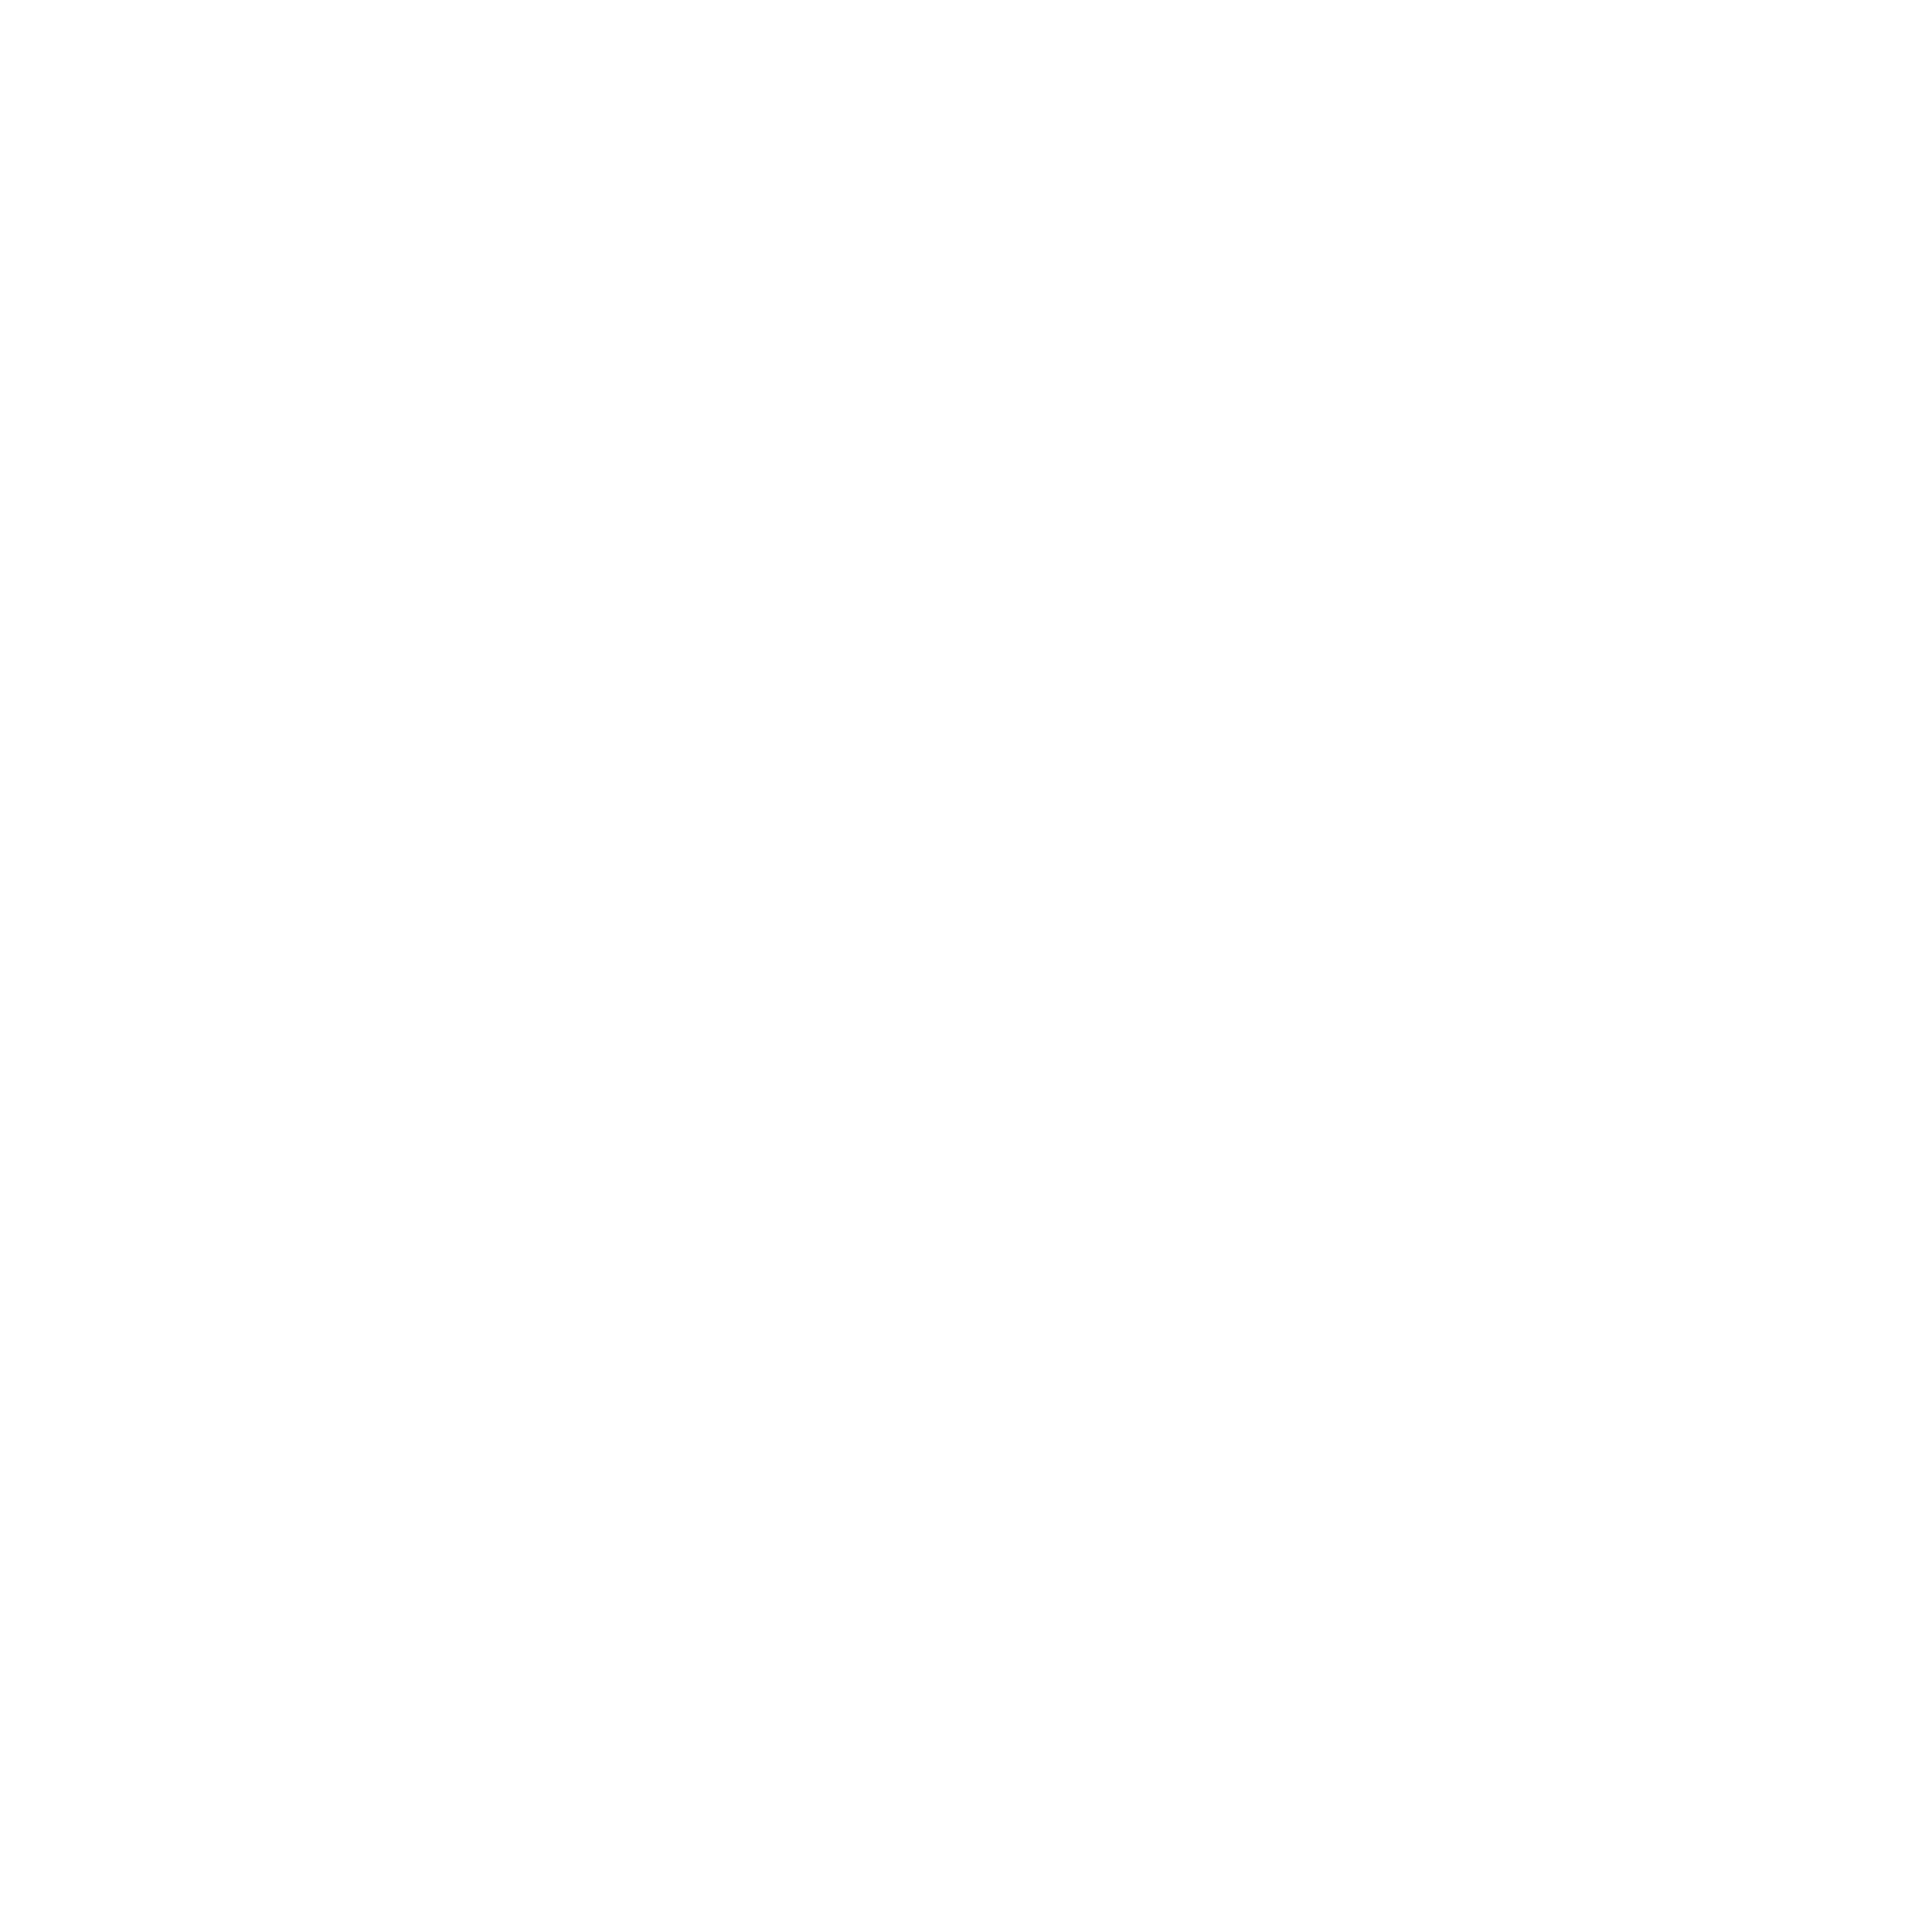 prell-logo-white.png__PID:5b0b7366-1145-4006-b5ad-9d71f2313486